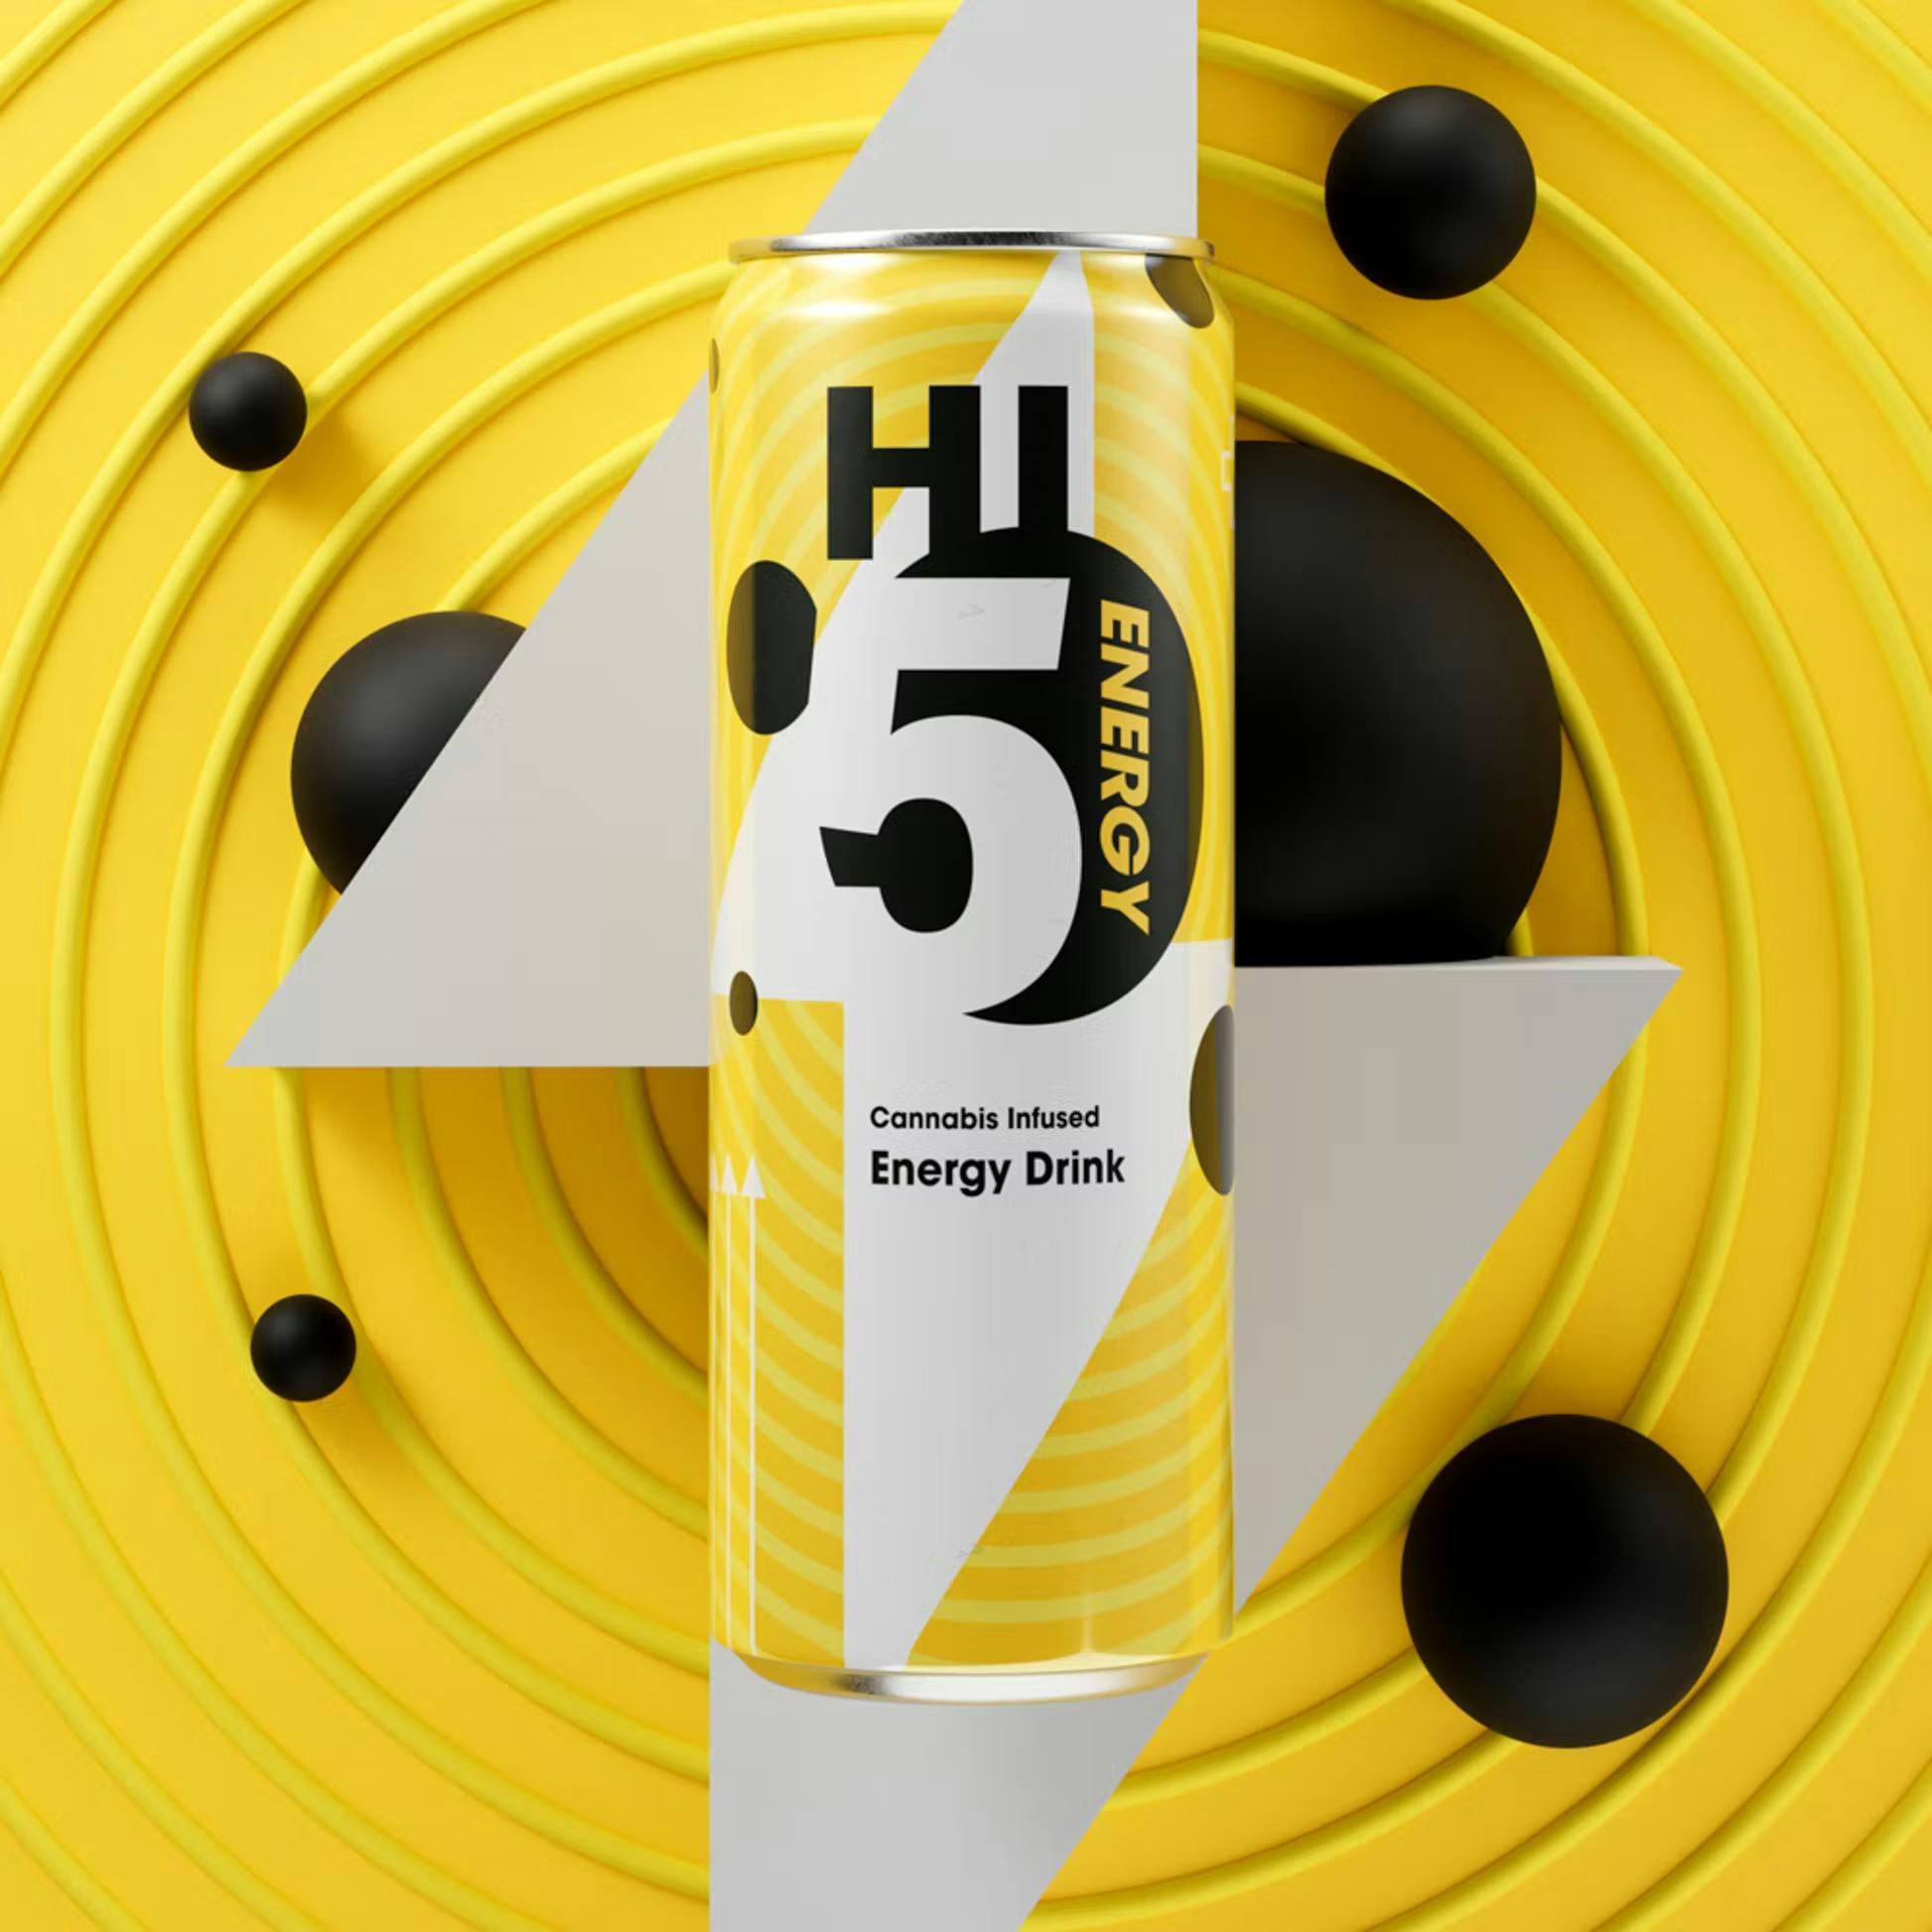 Hi5 Energy - 5 mg THC - Original